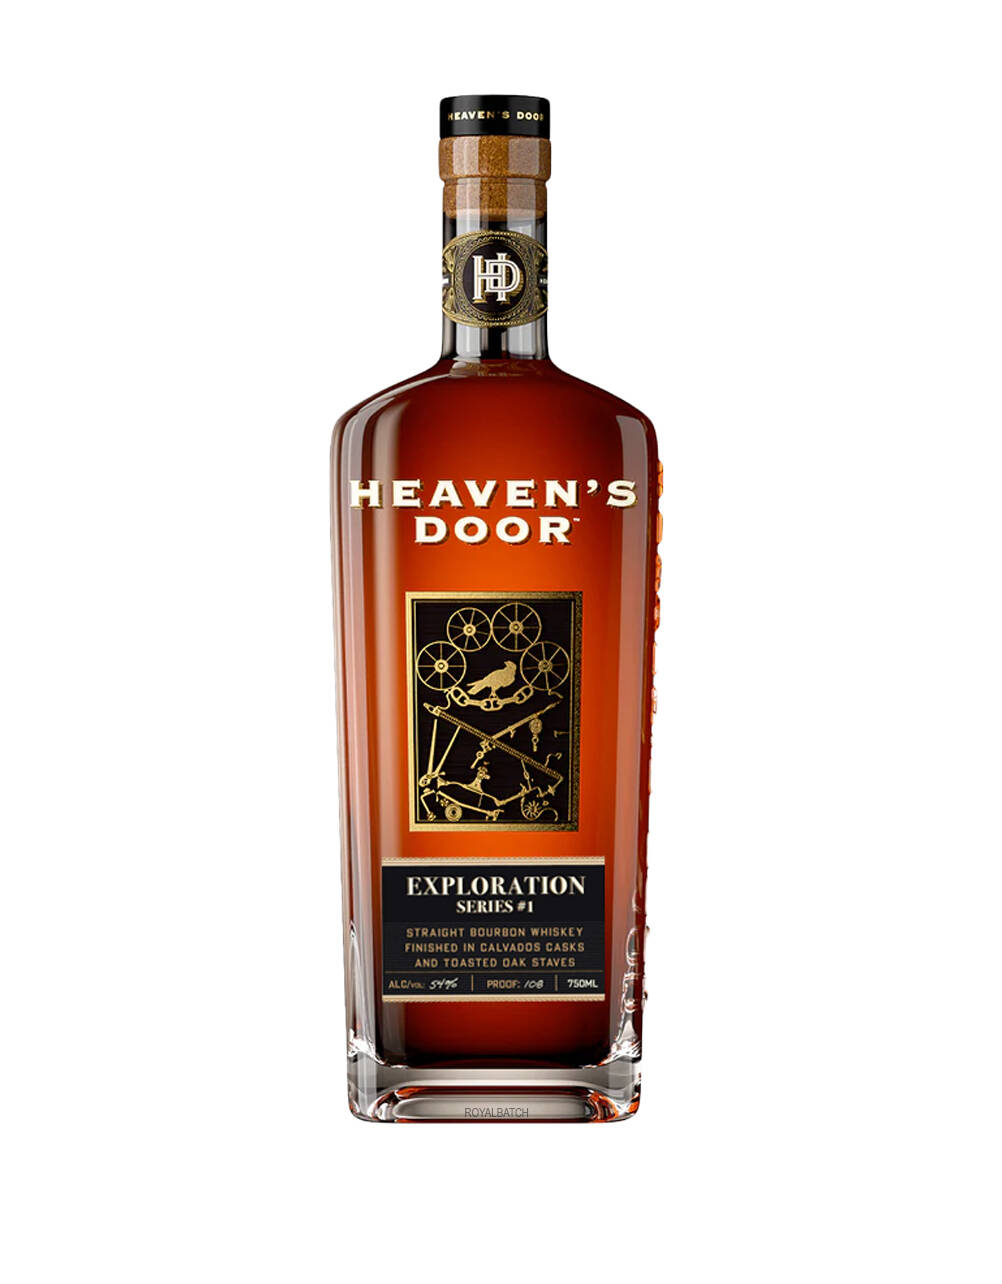 Heavens Door Exploration Series #1 Straight Bourbon Whiskey